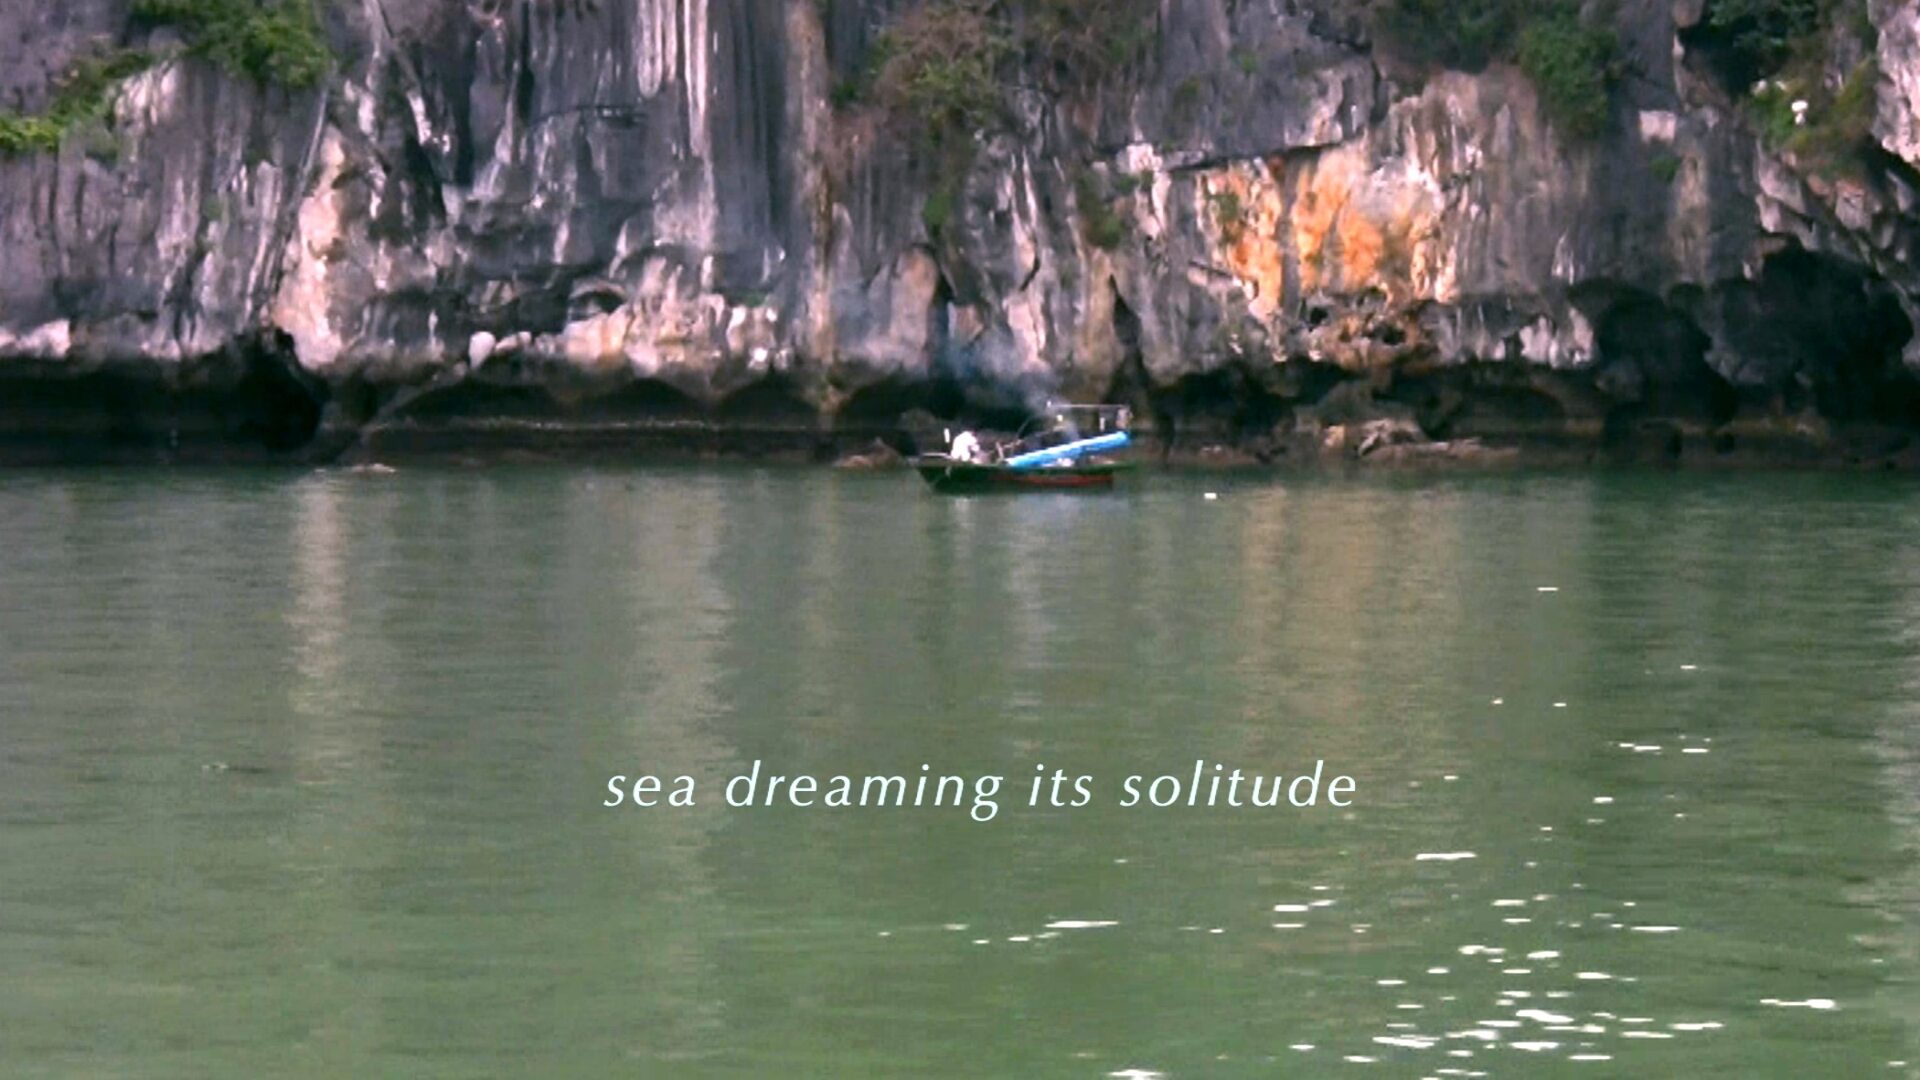 9 FVN sea dreaming its solitute